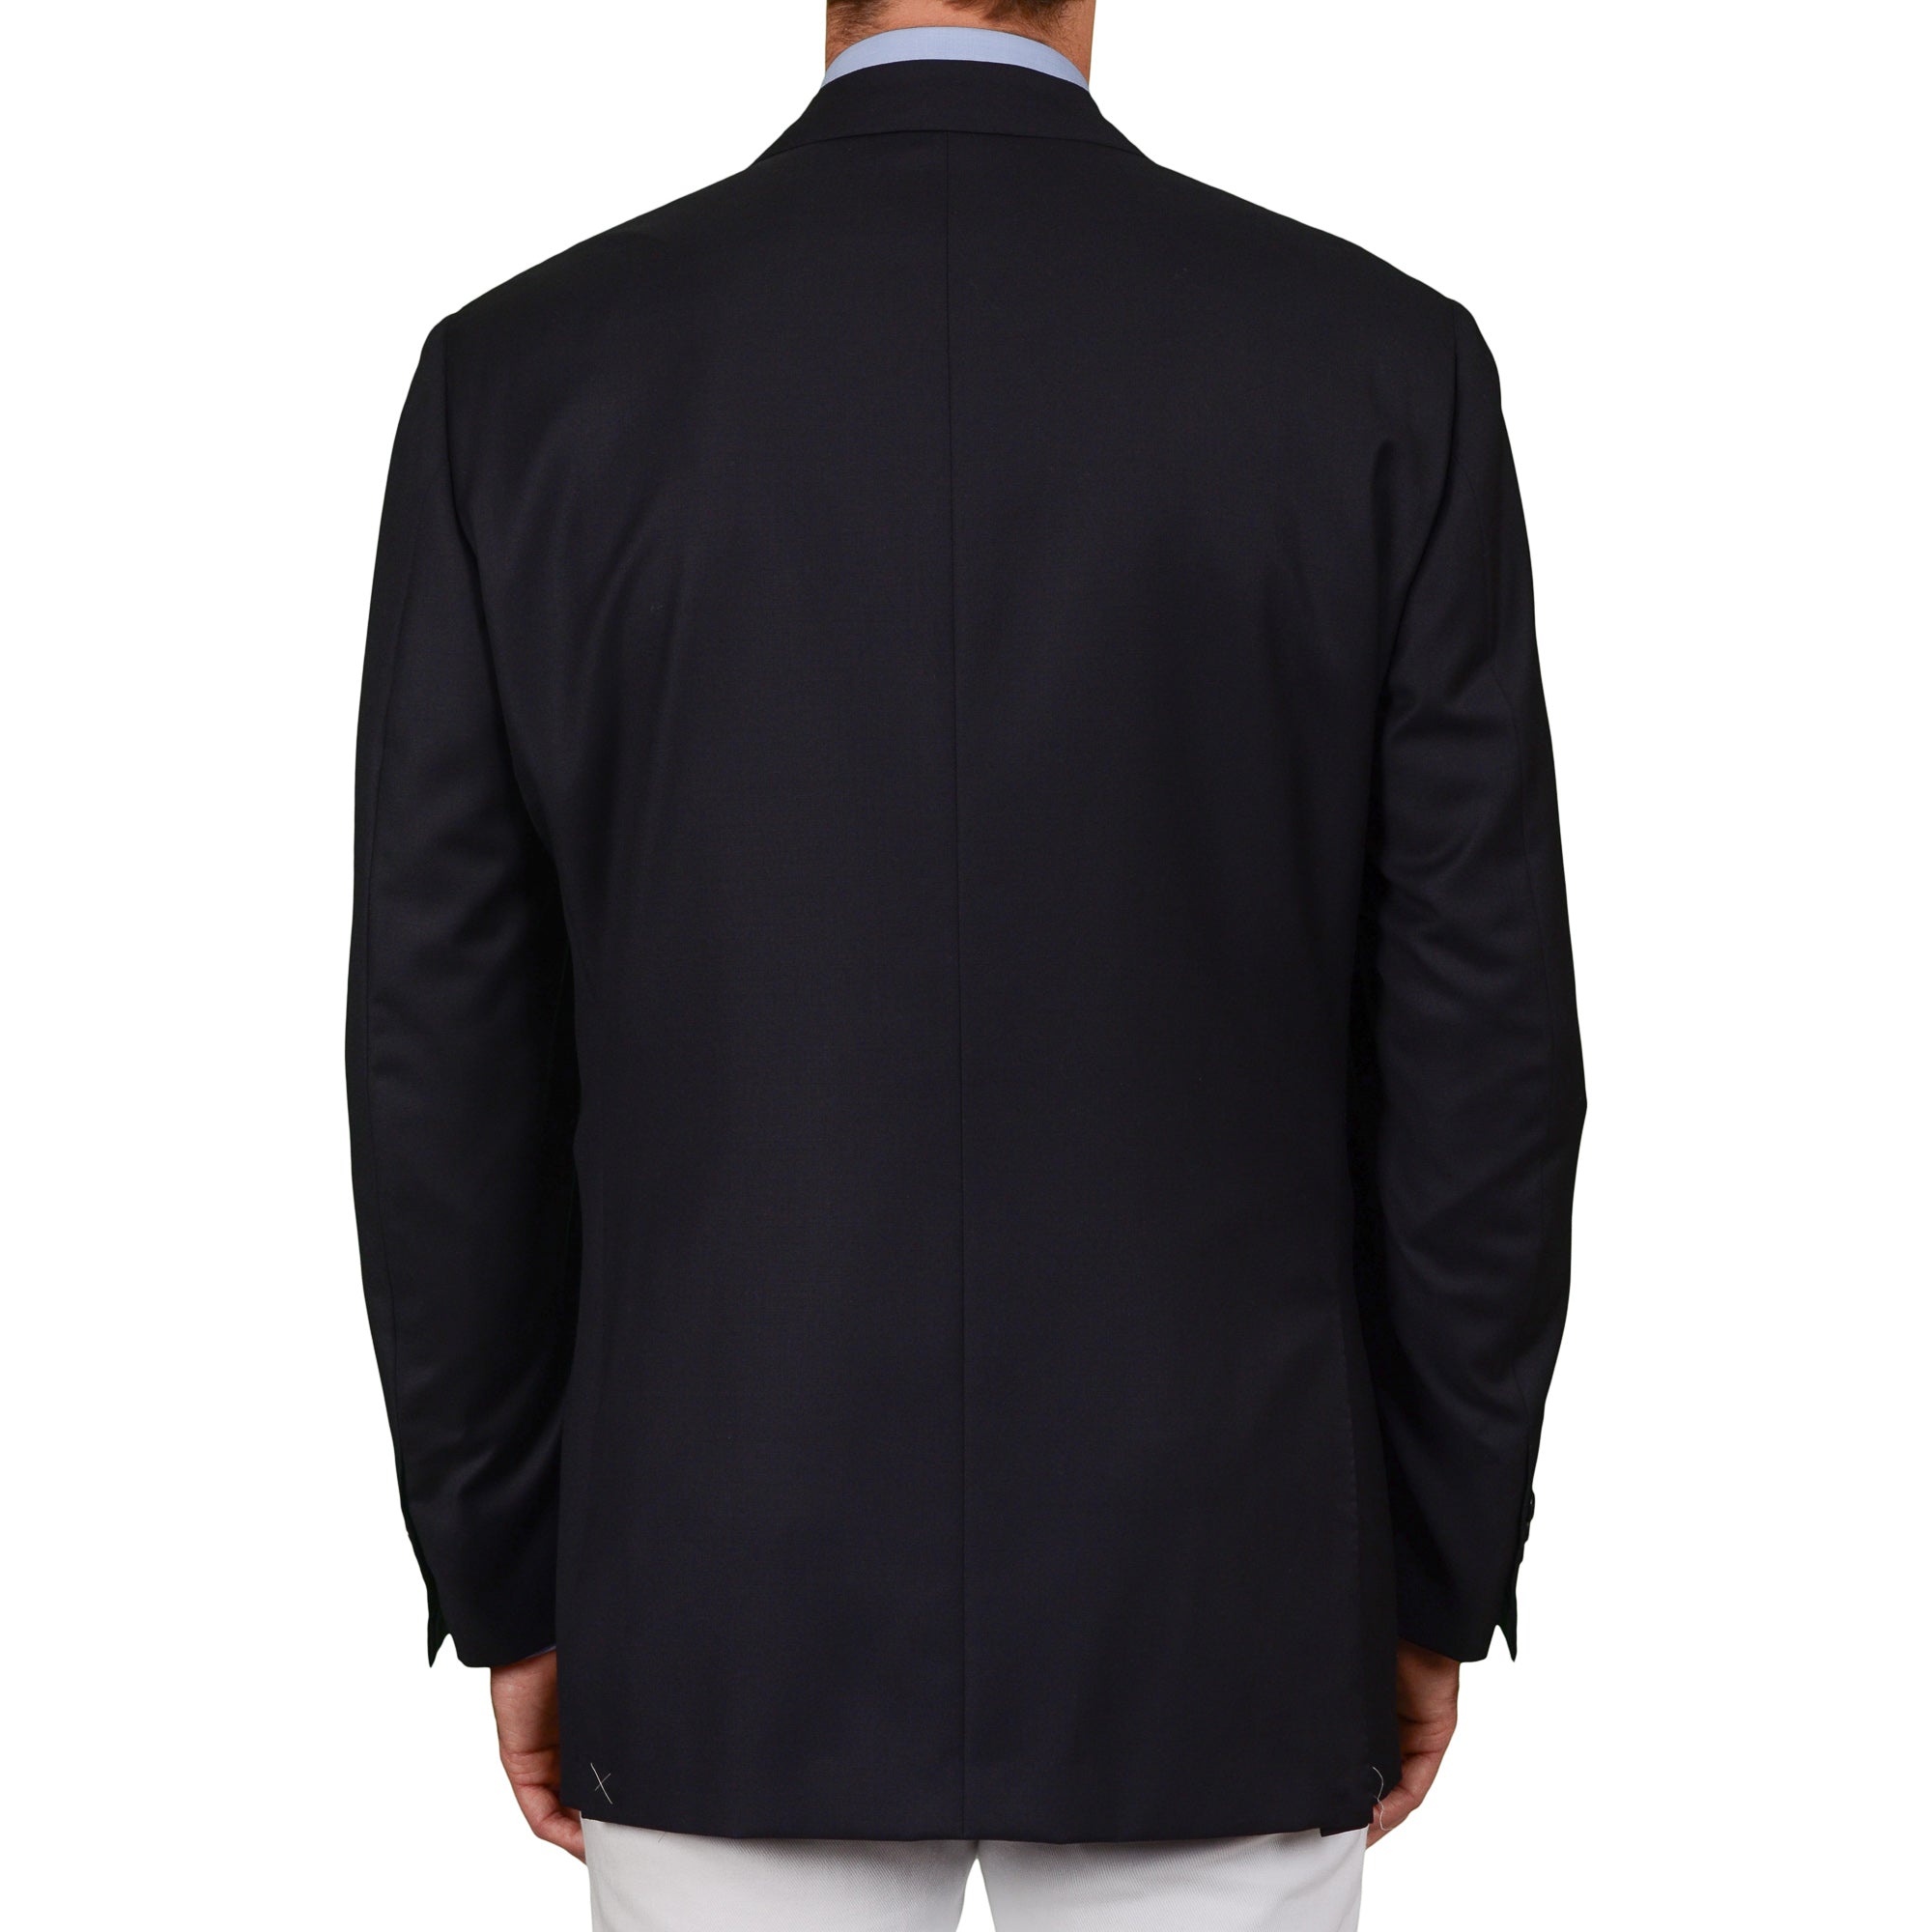 AMIR Handmade Dark Blue Wool Super 150's Jacket Sport Coat EU 54 NEW US 44